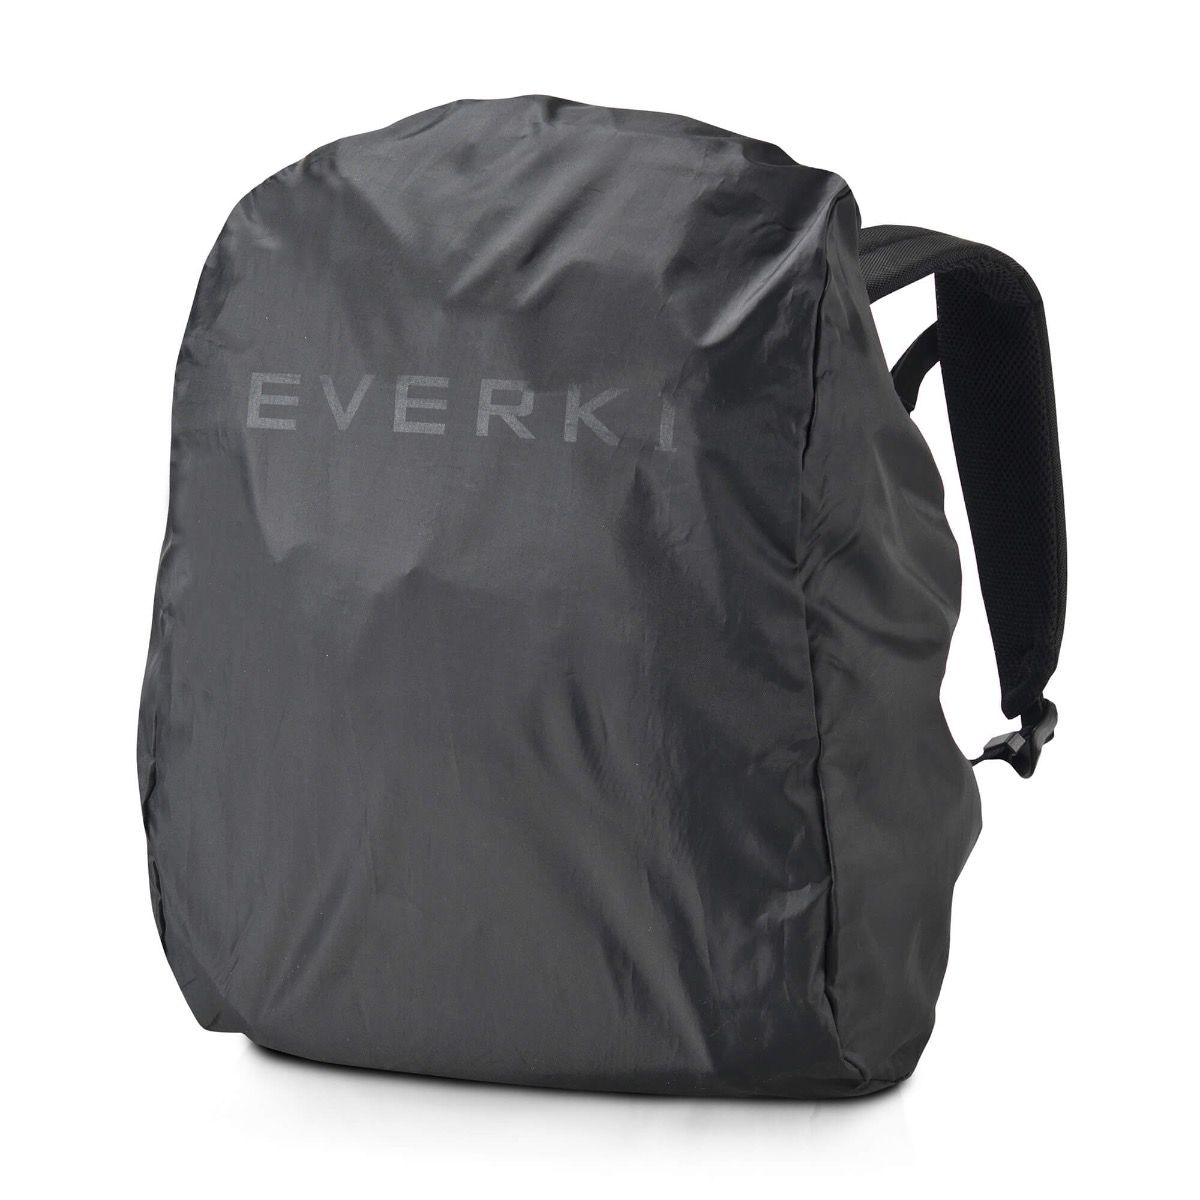 StarSaif Rain Cover for Backpack - Premium Rain Bag Cover